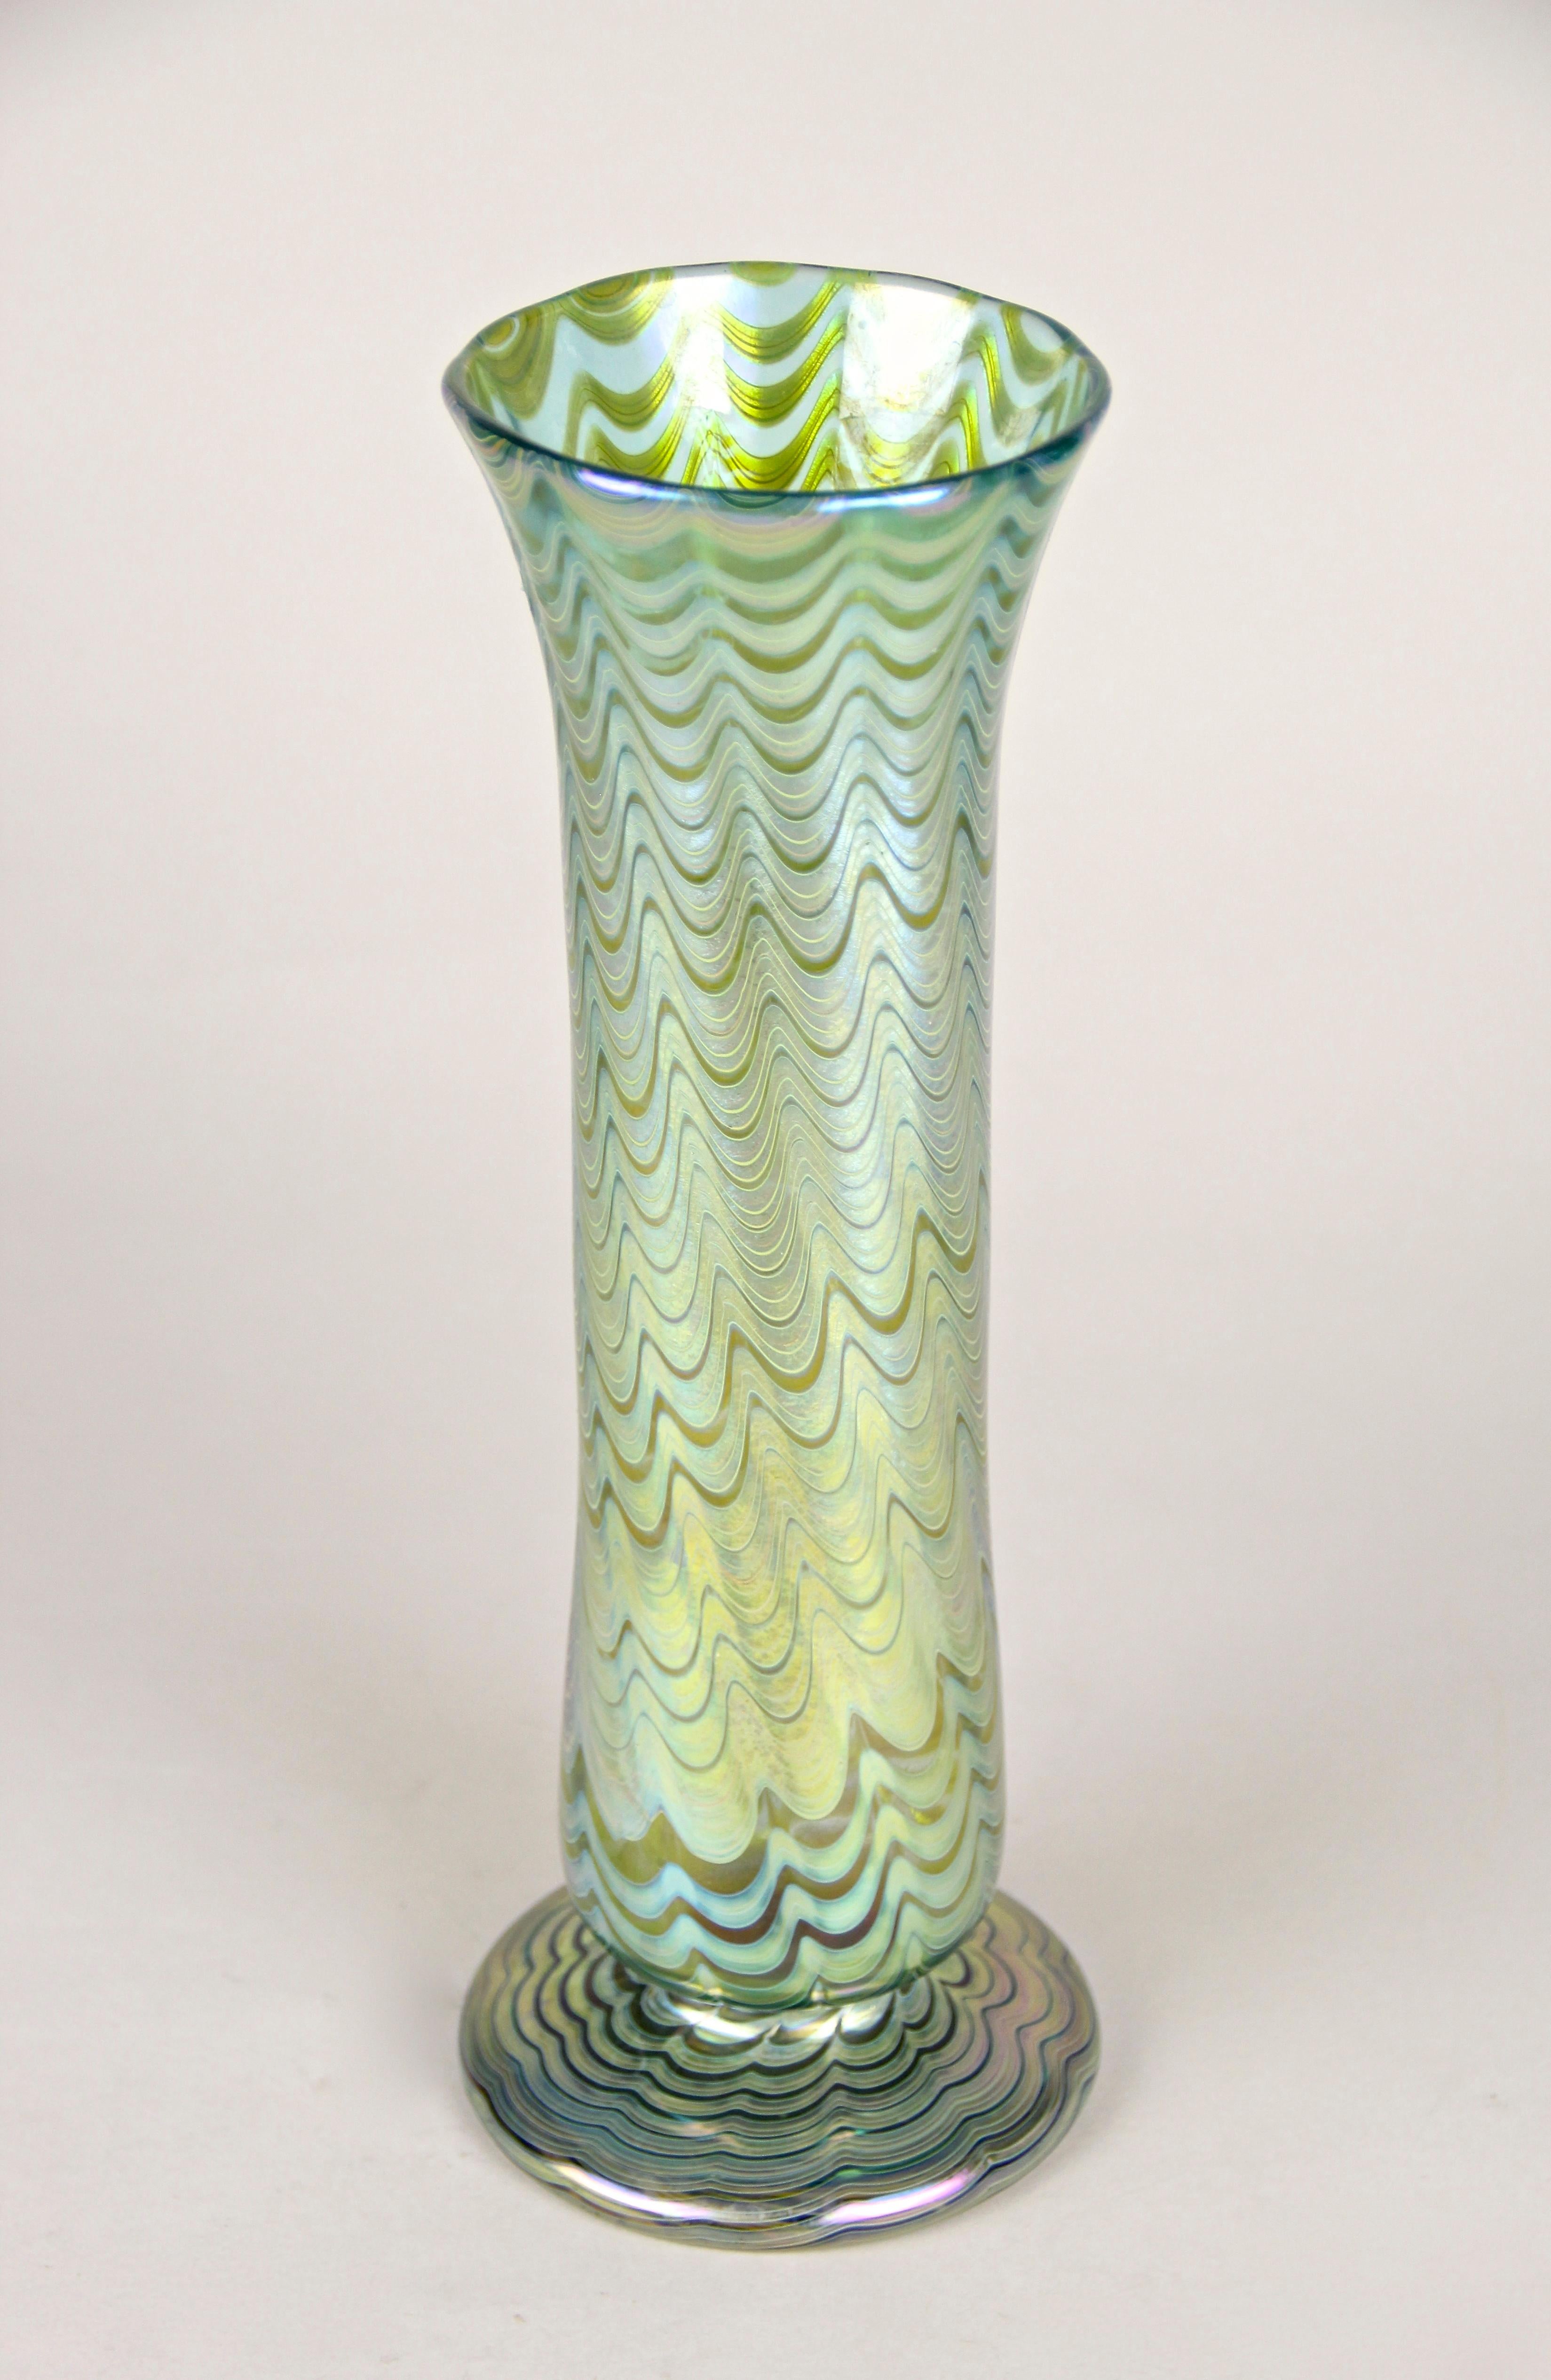 Loetz Witwe Glass Vase Phaenomen Genre 6893 Green, Bohemia, circa 1899 In Good Condition For Sale In Lichtenberg, AT